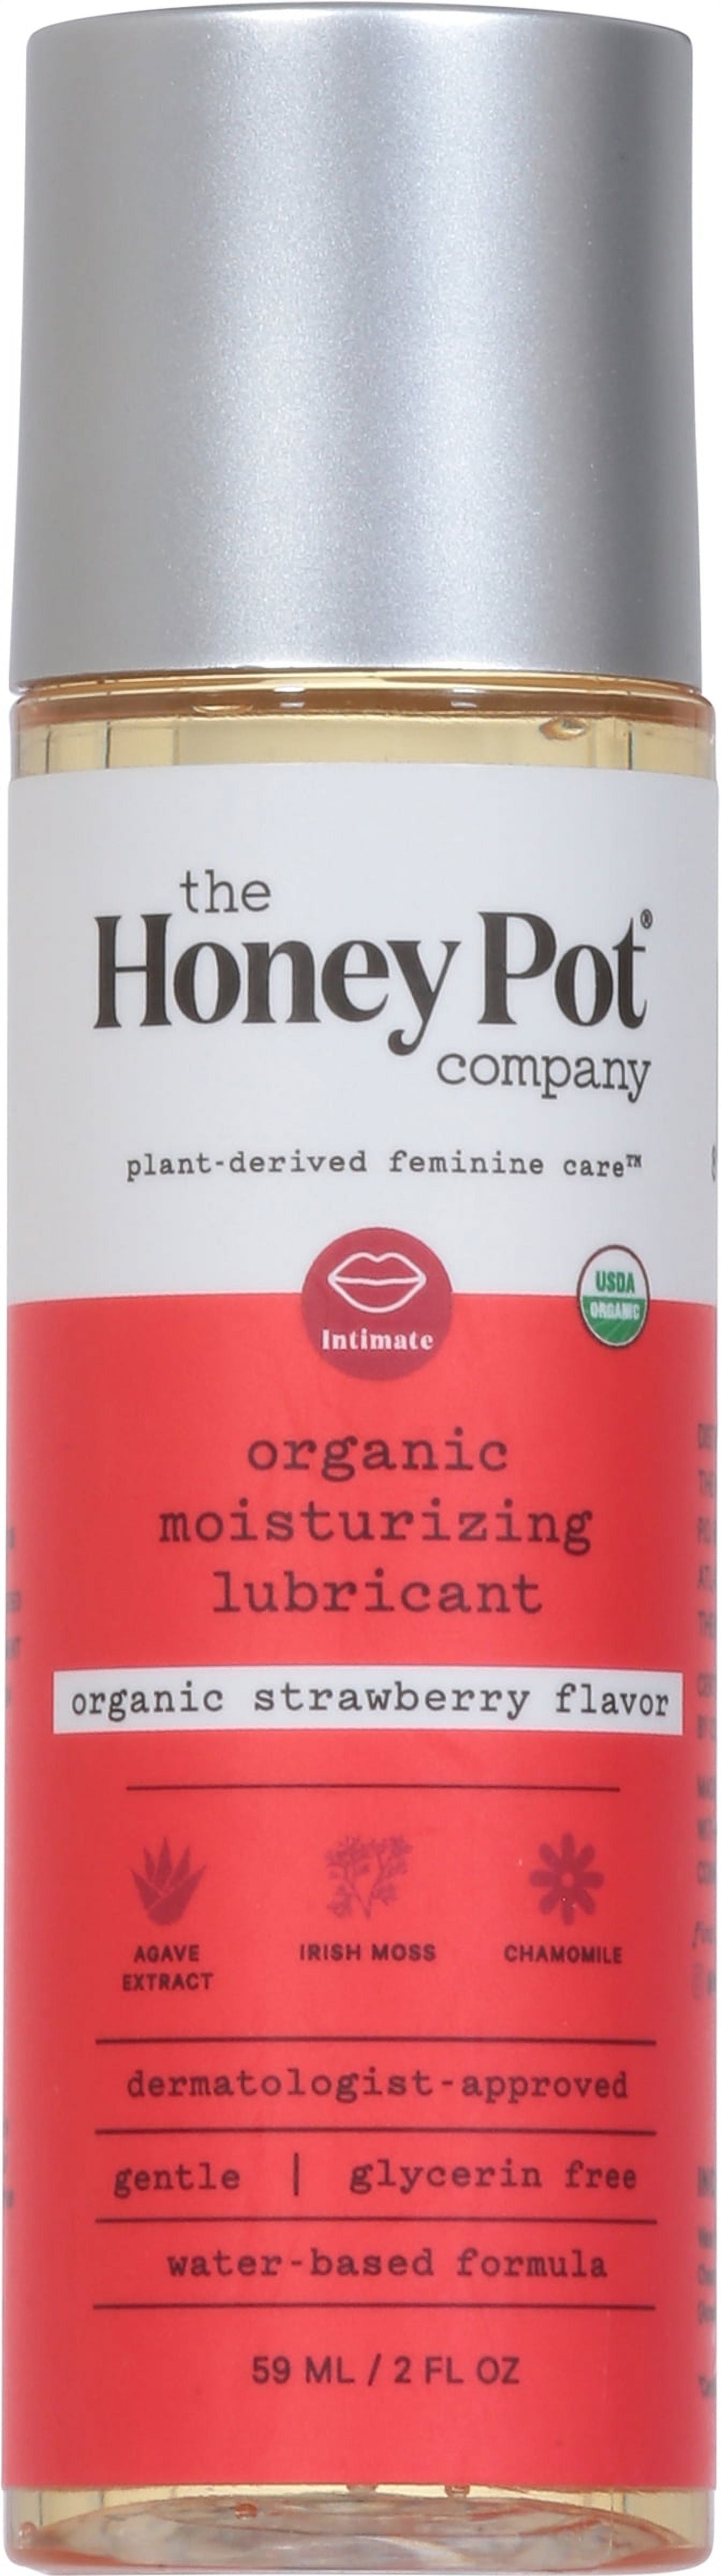 Silicone Hybrid Lubricant – The Honey Pot - Feminine Care